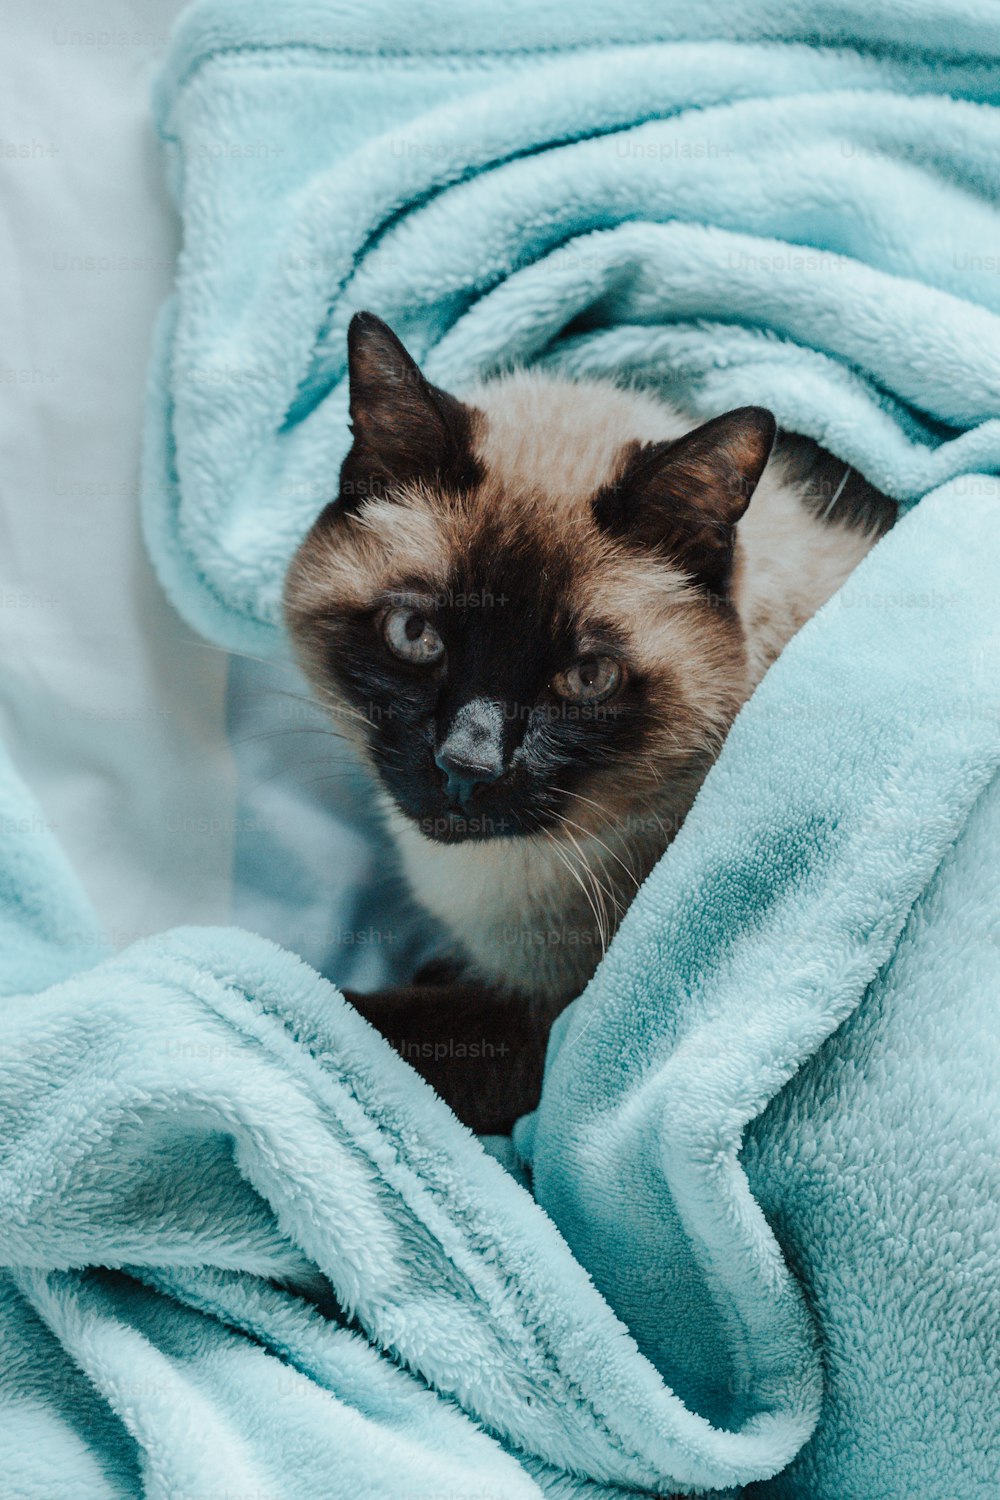 a siamese cat sitting under a blue blanket